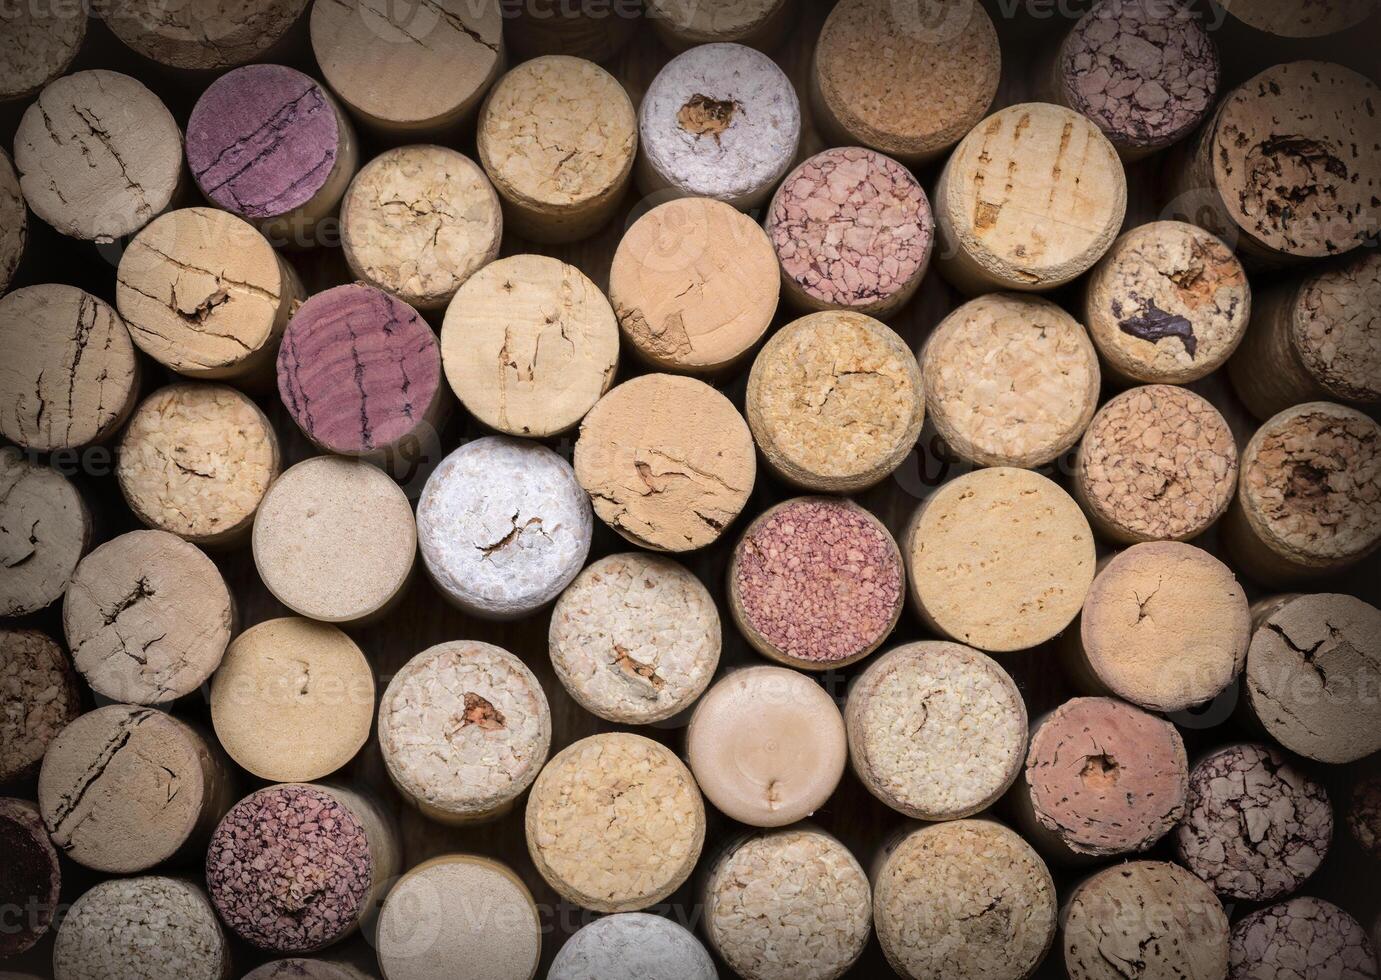 wine corks on wooden photo